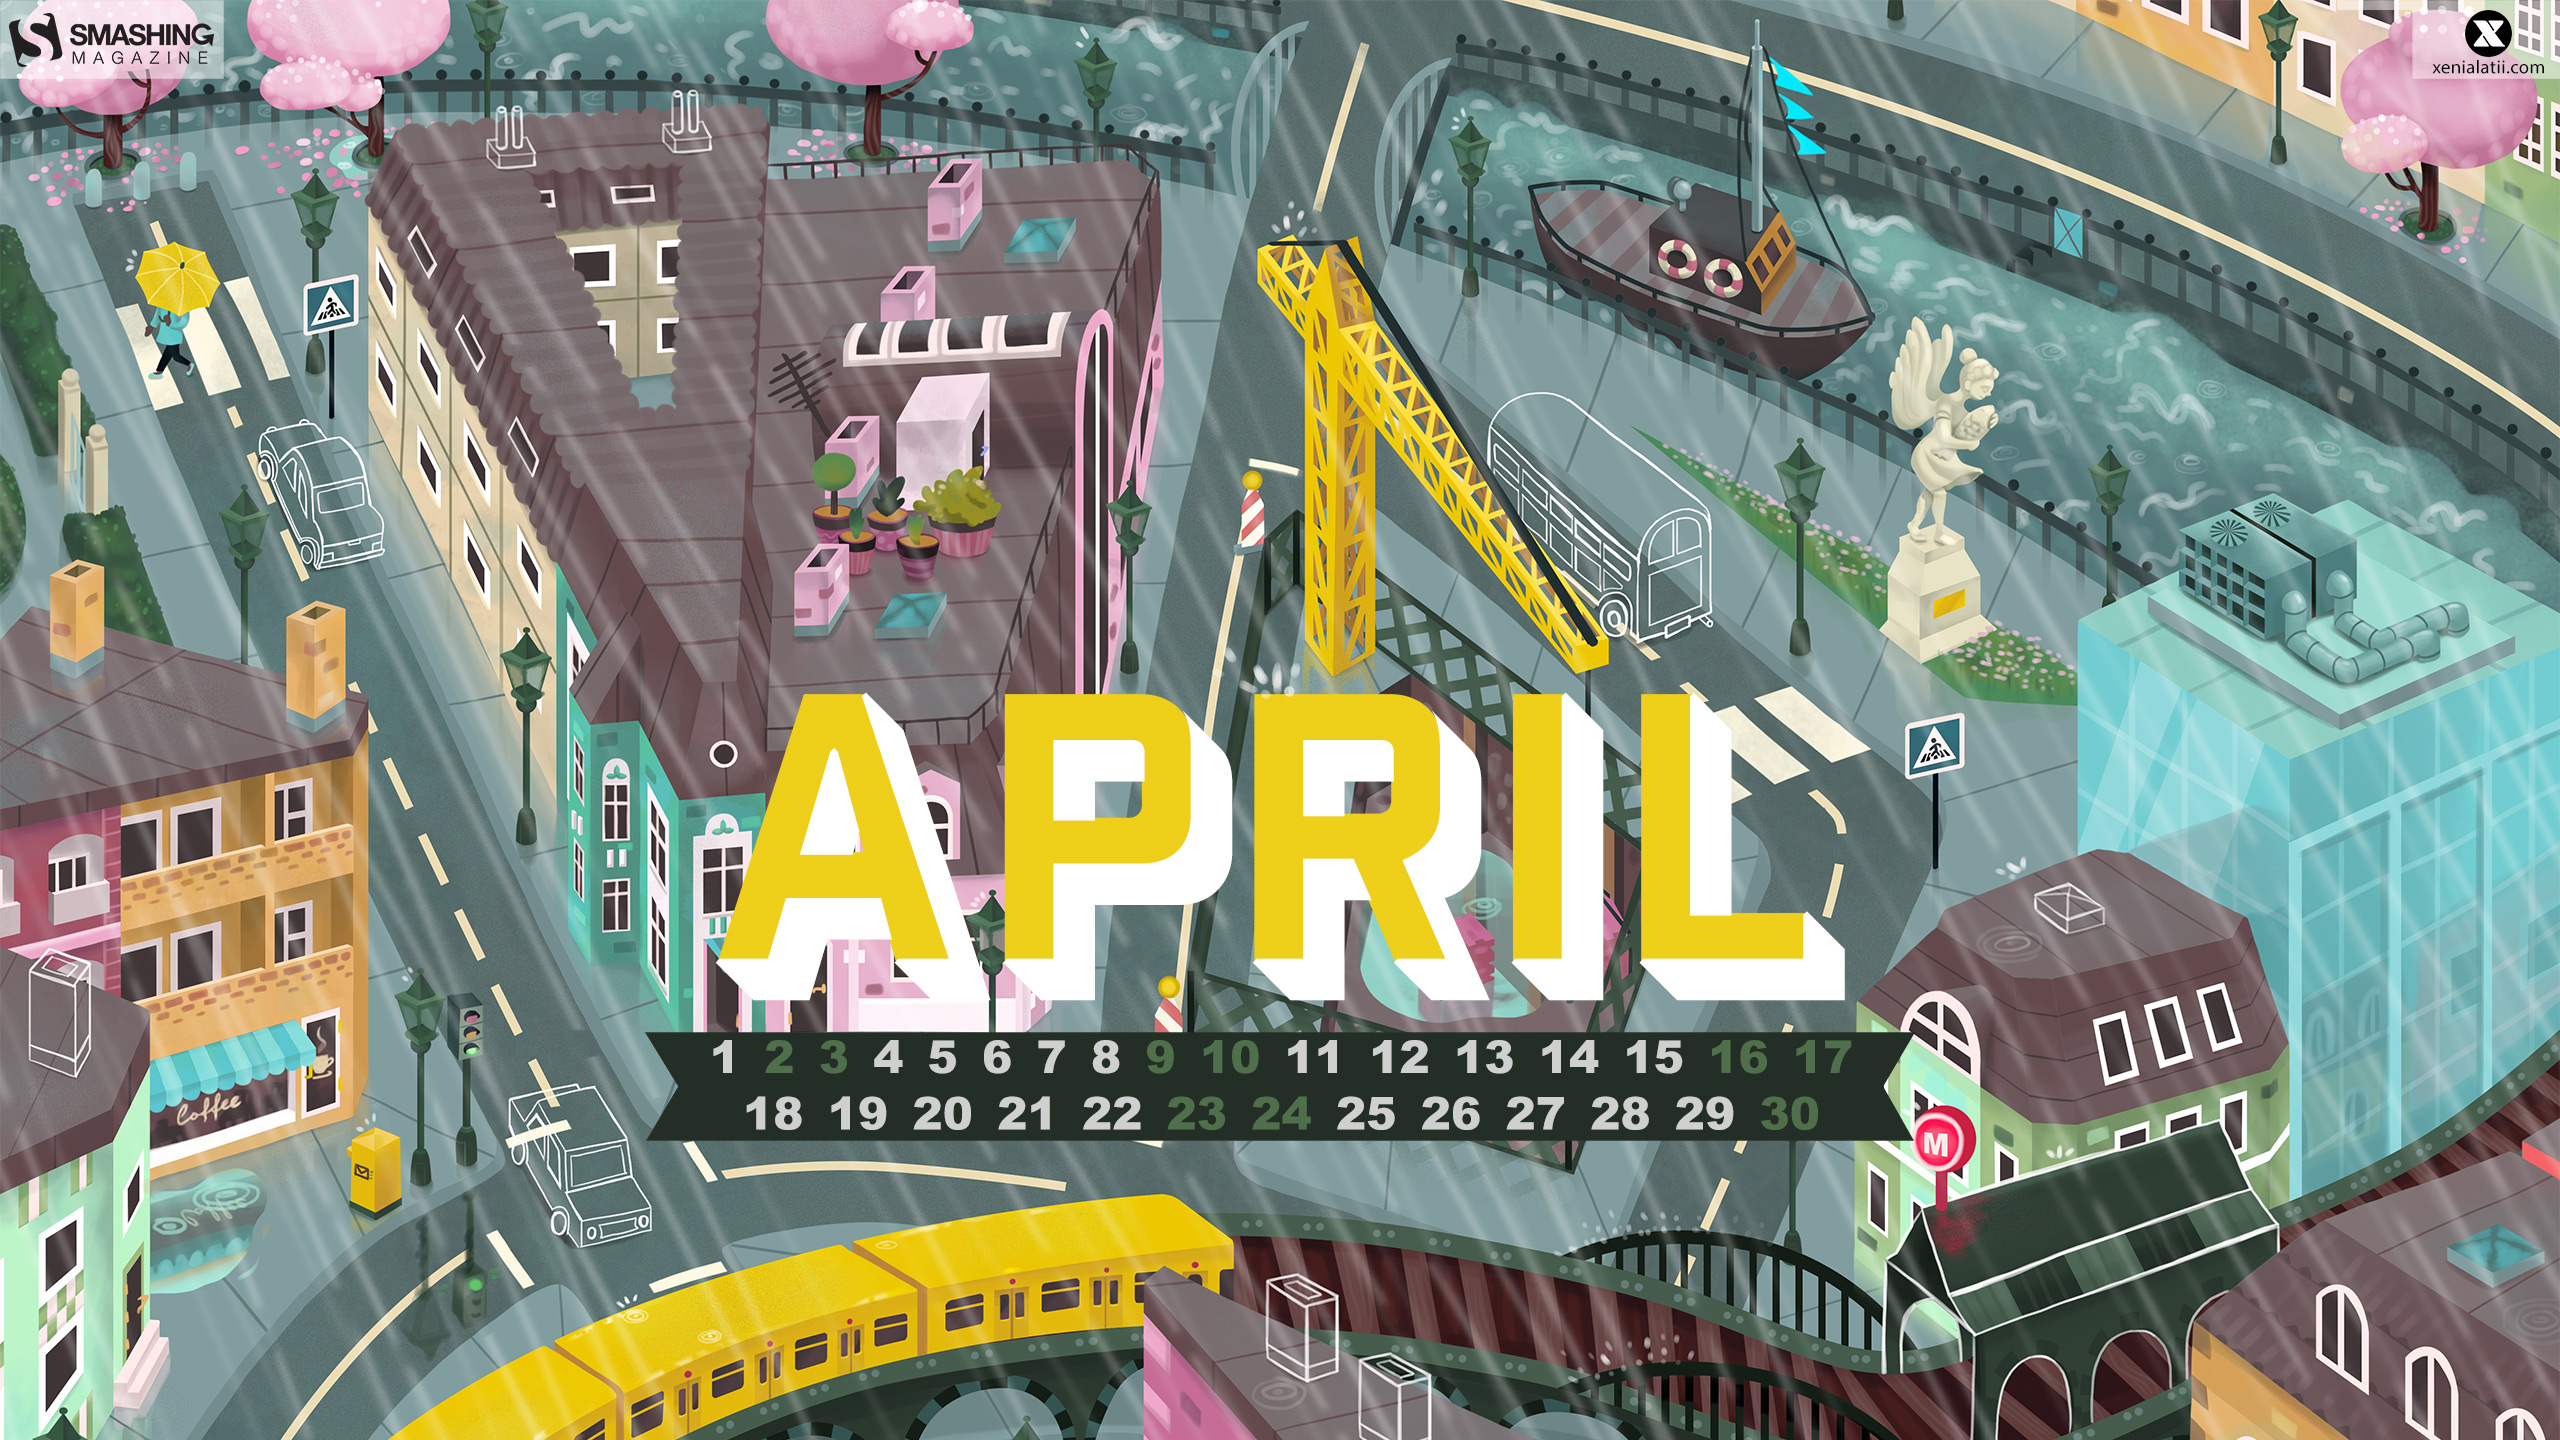 Desktop Wallpaper Calendars April Smashing Magazine